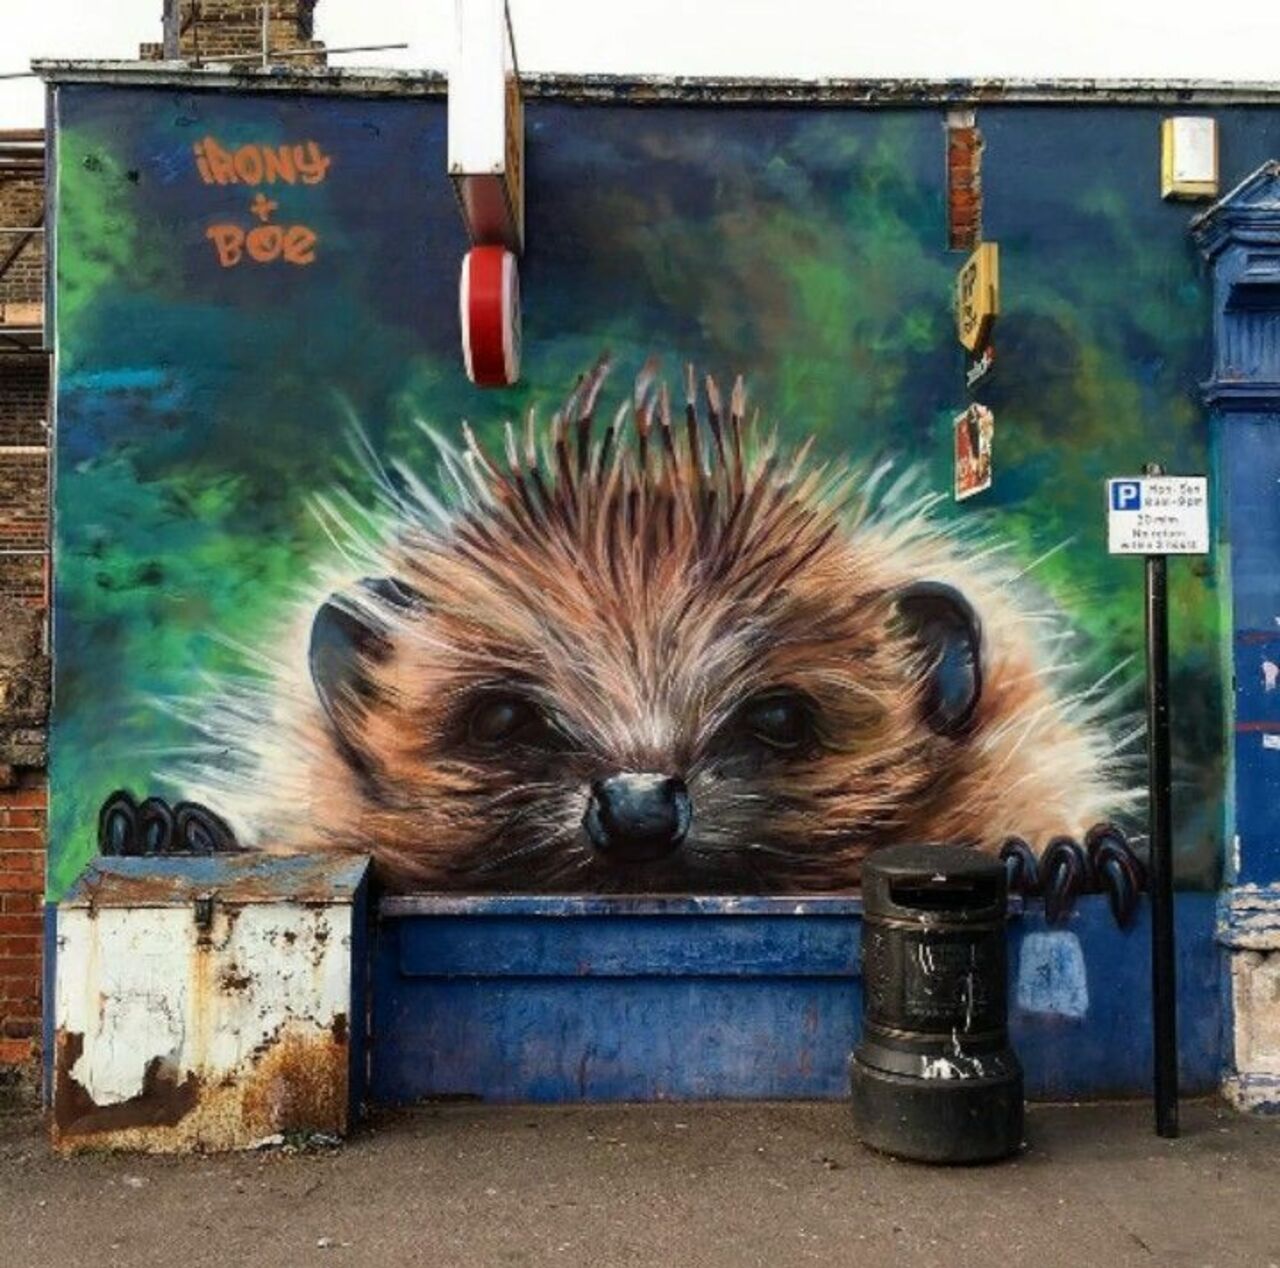 Mural by Whoamirony & Boe, located in London, UK#streetart #mural #graffiti #art https://t.co/p44FXpIeb5